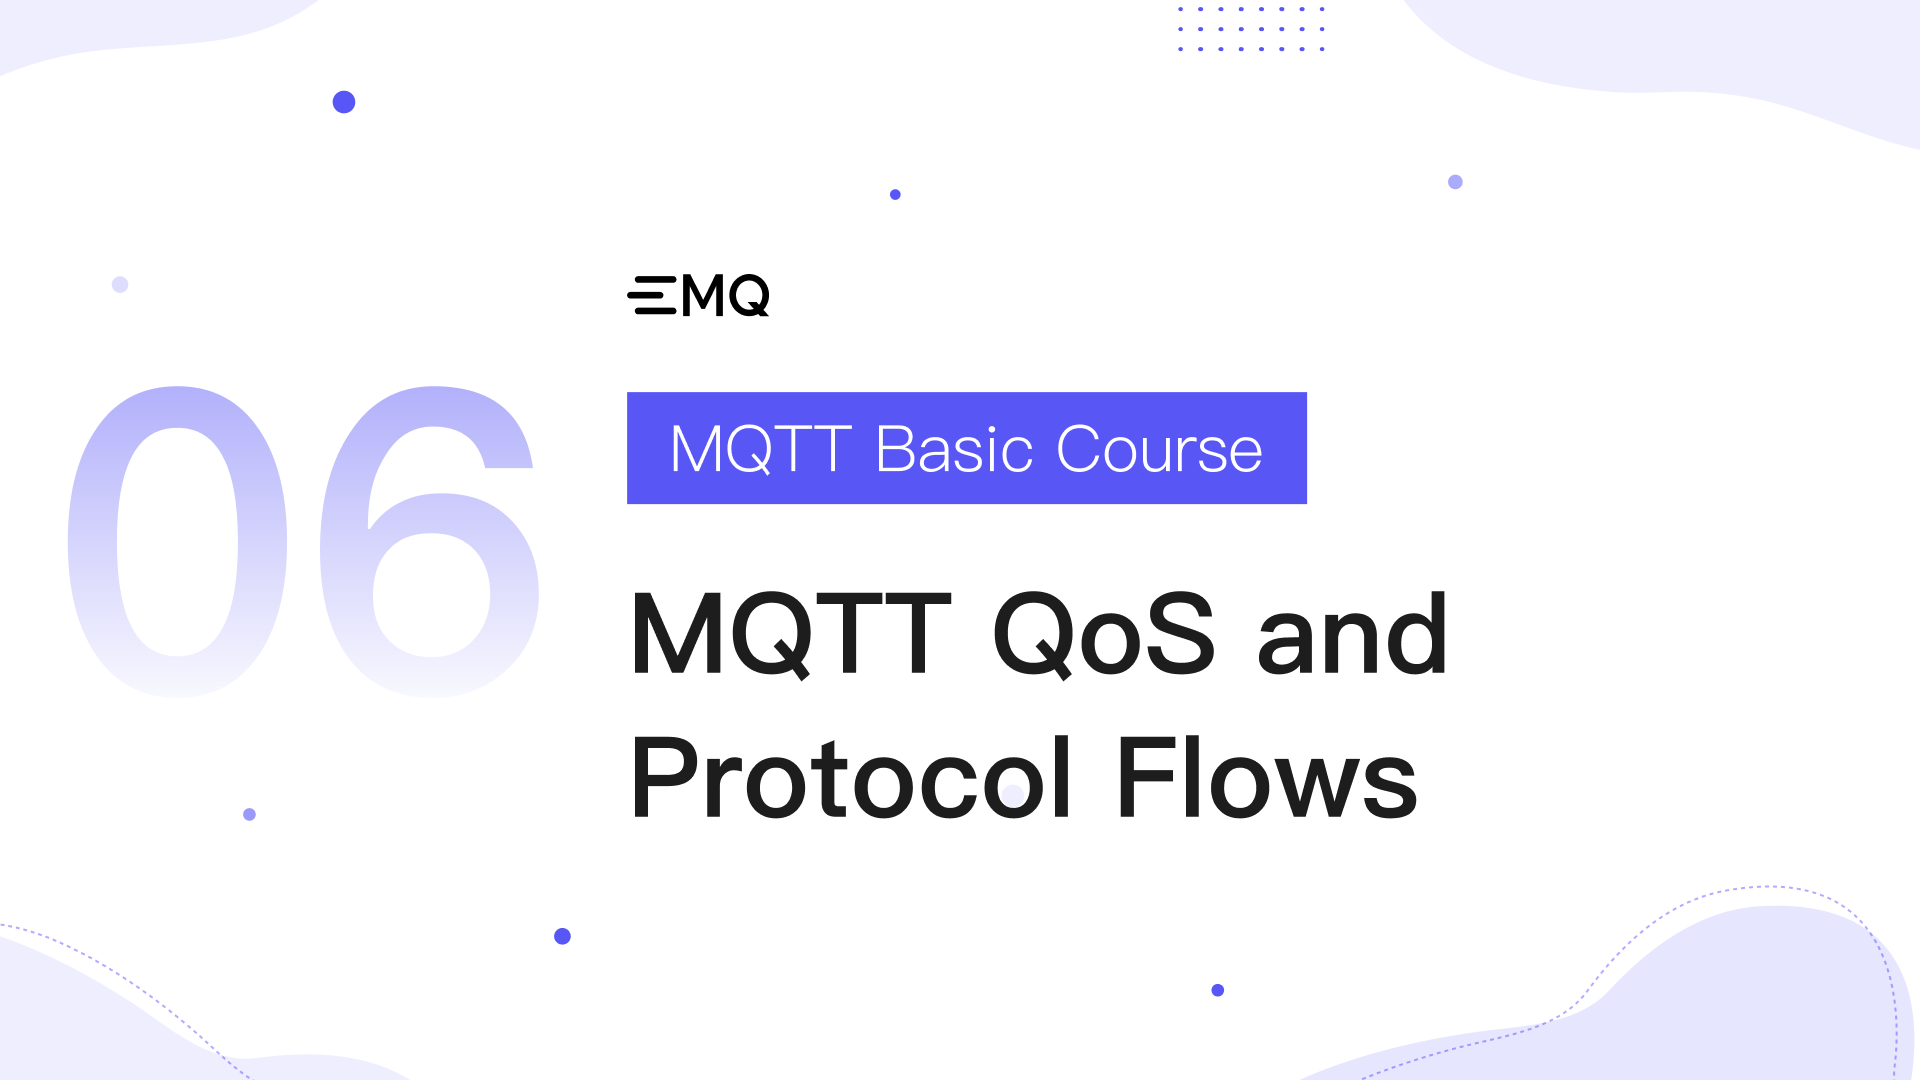 Lesson 6: MQTT QoS and Protocol Flows - MQTT Basic Course